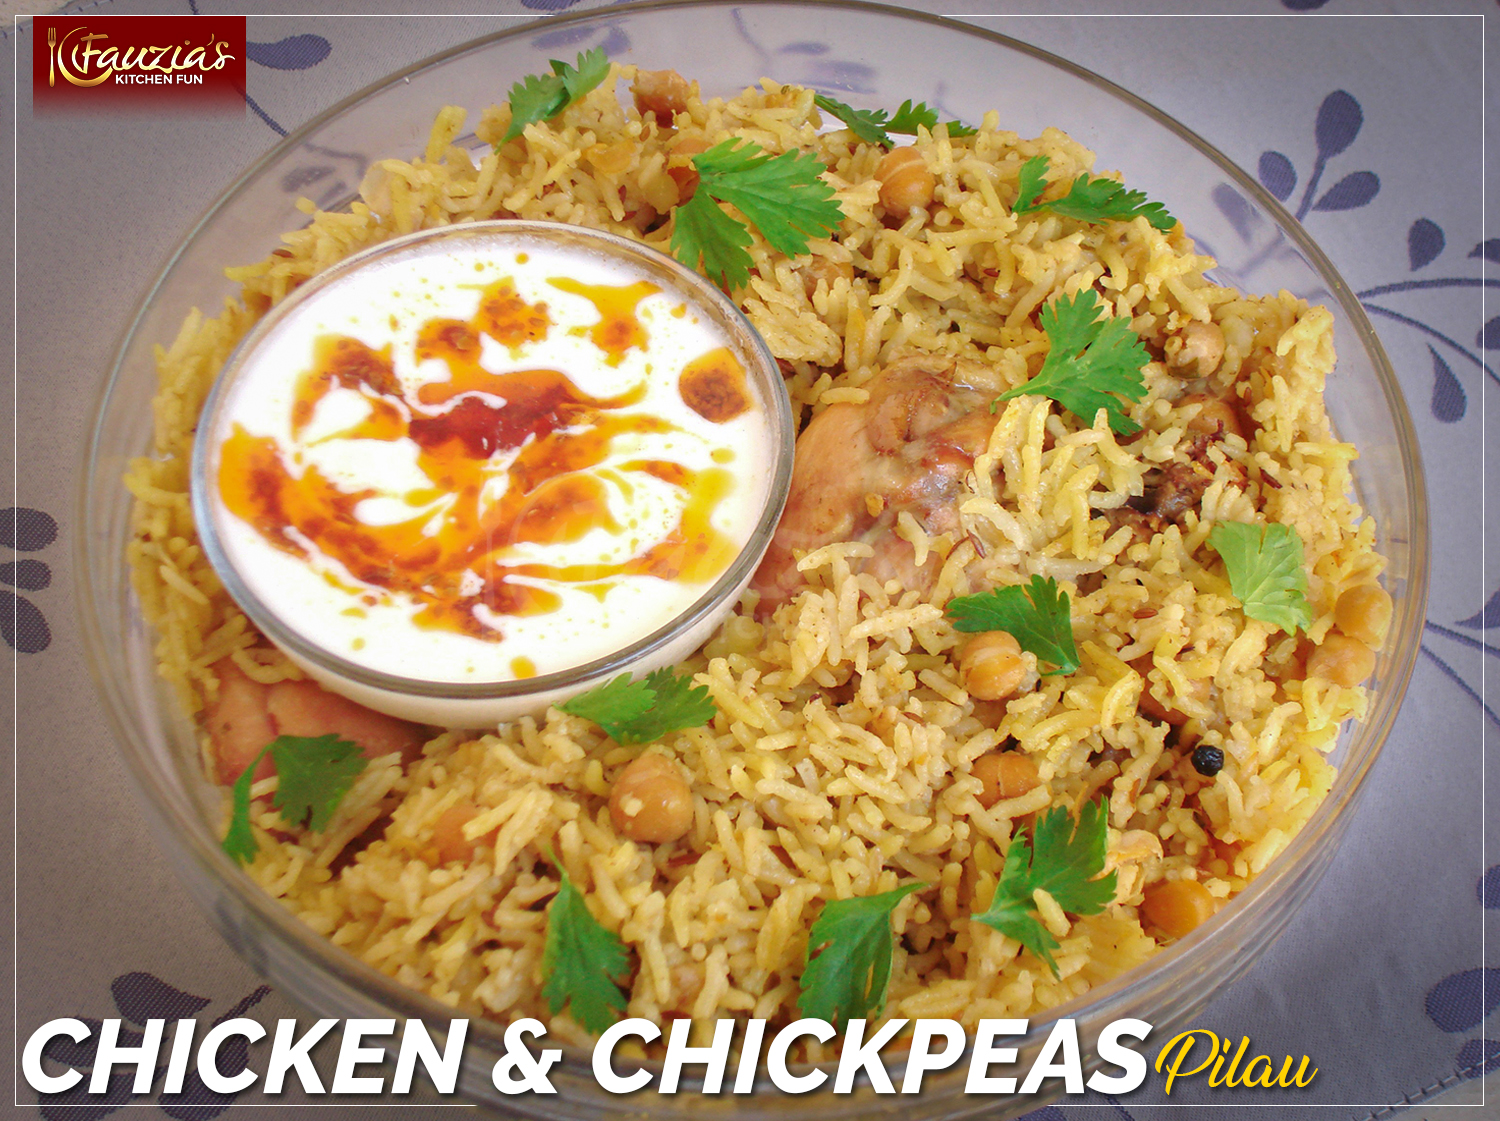 Chicken & Chickpeas Pilau - Fauzia's Kitchen Fun